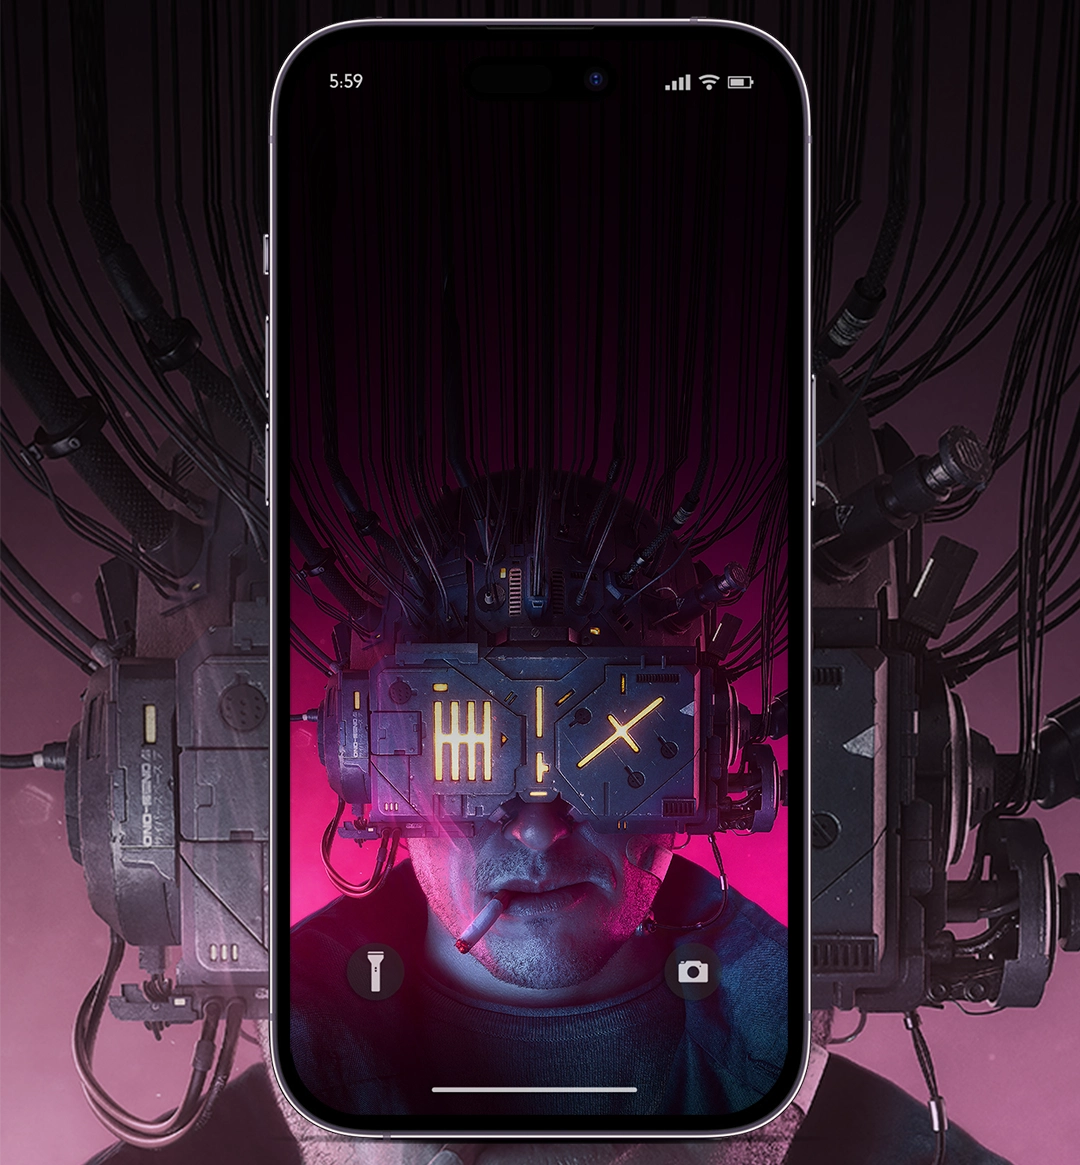 iPhone wallpaper 4k - Cyberpunk